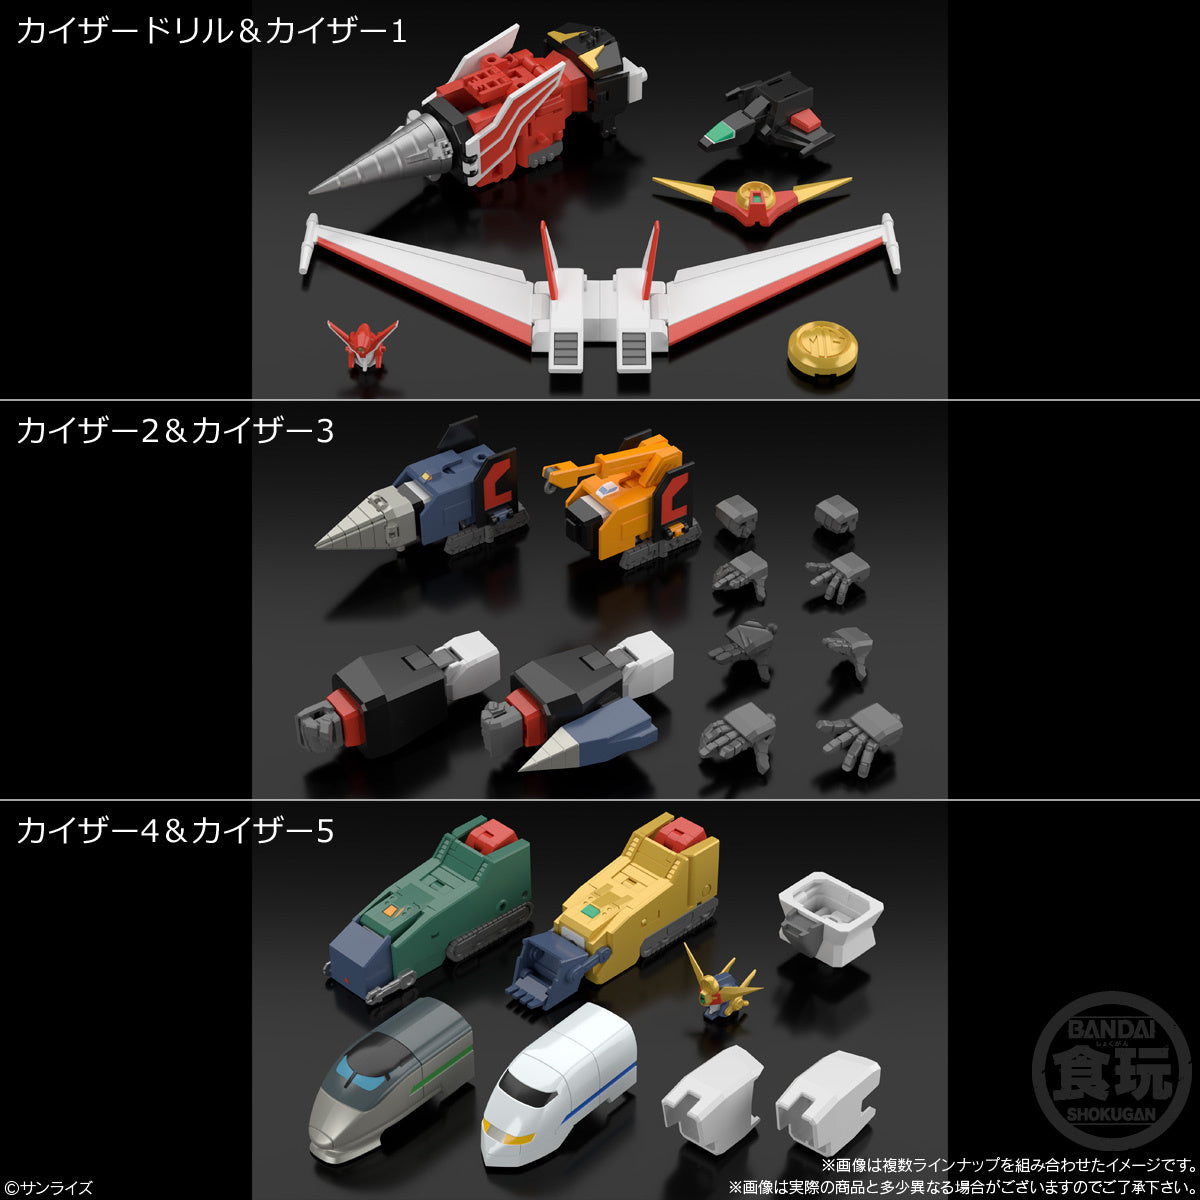 Bandai - Shokugan - SMP [Shokugan Modeling Project] - The Brave Express Might Gaine 2 Model Kit (Box of 3) - Marvelous Toys